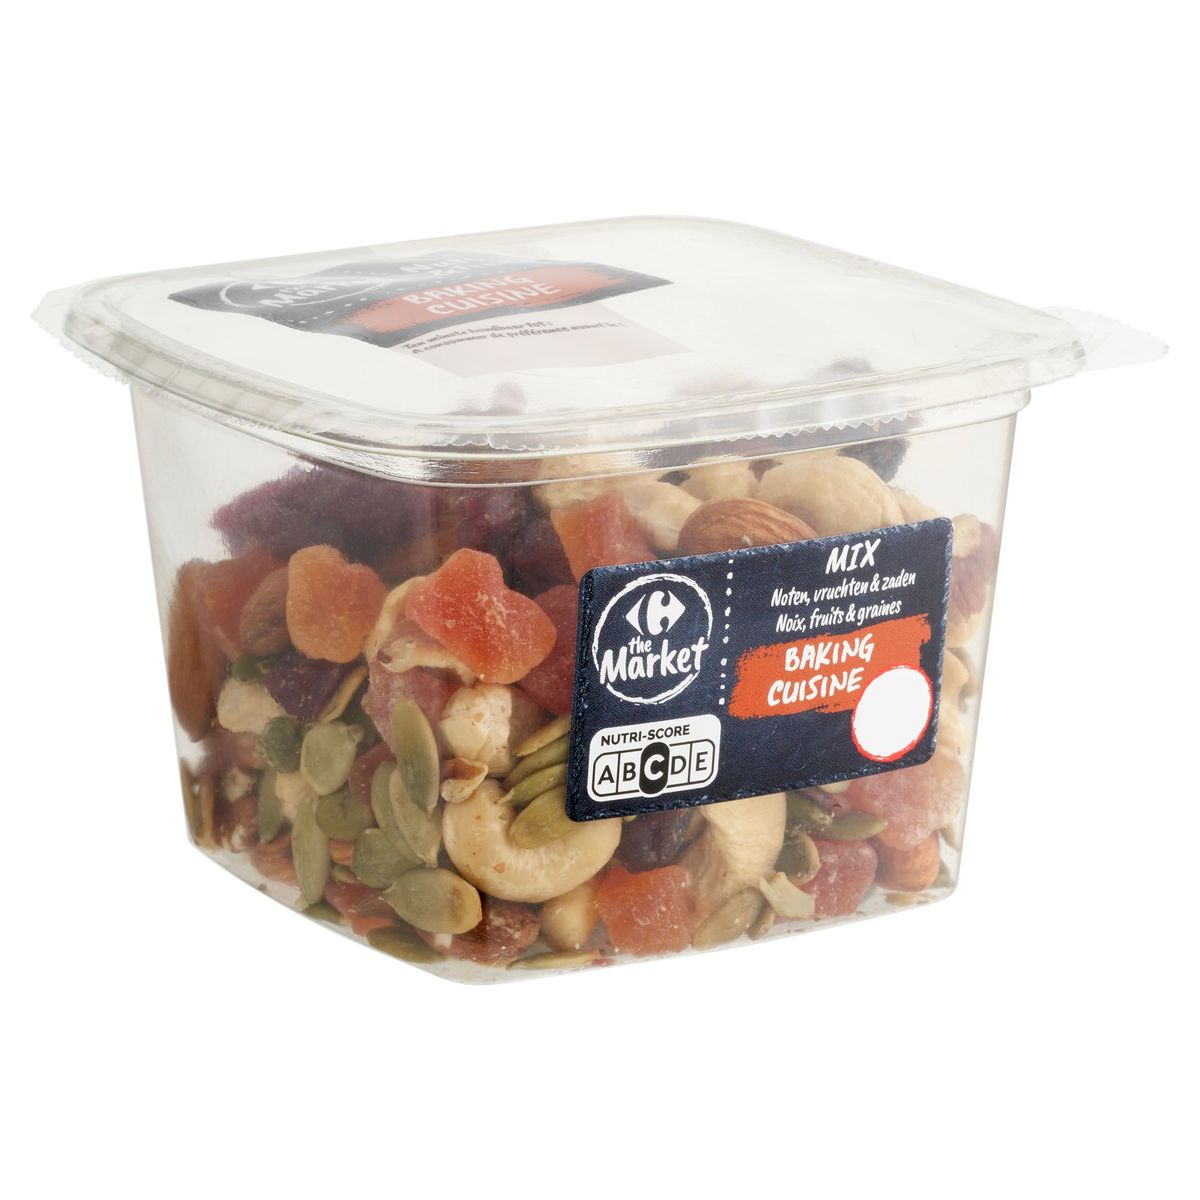 Carrefour The Market Nuts & Fruits Baking Cuisine Mix Noten, Vruchten & Zaden 160 g